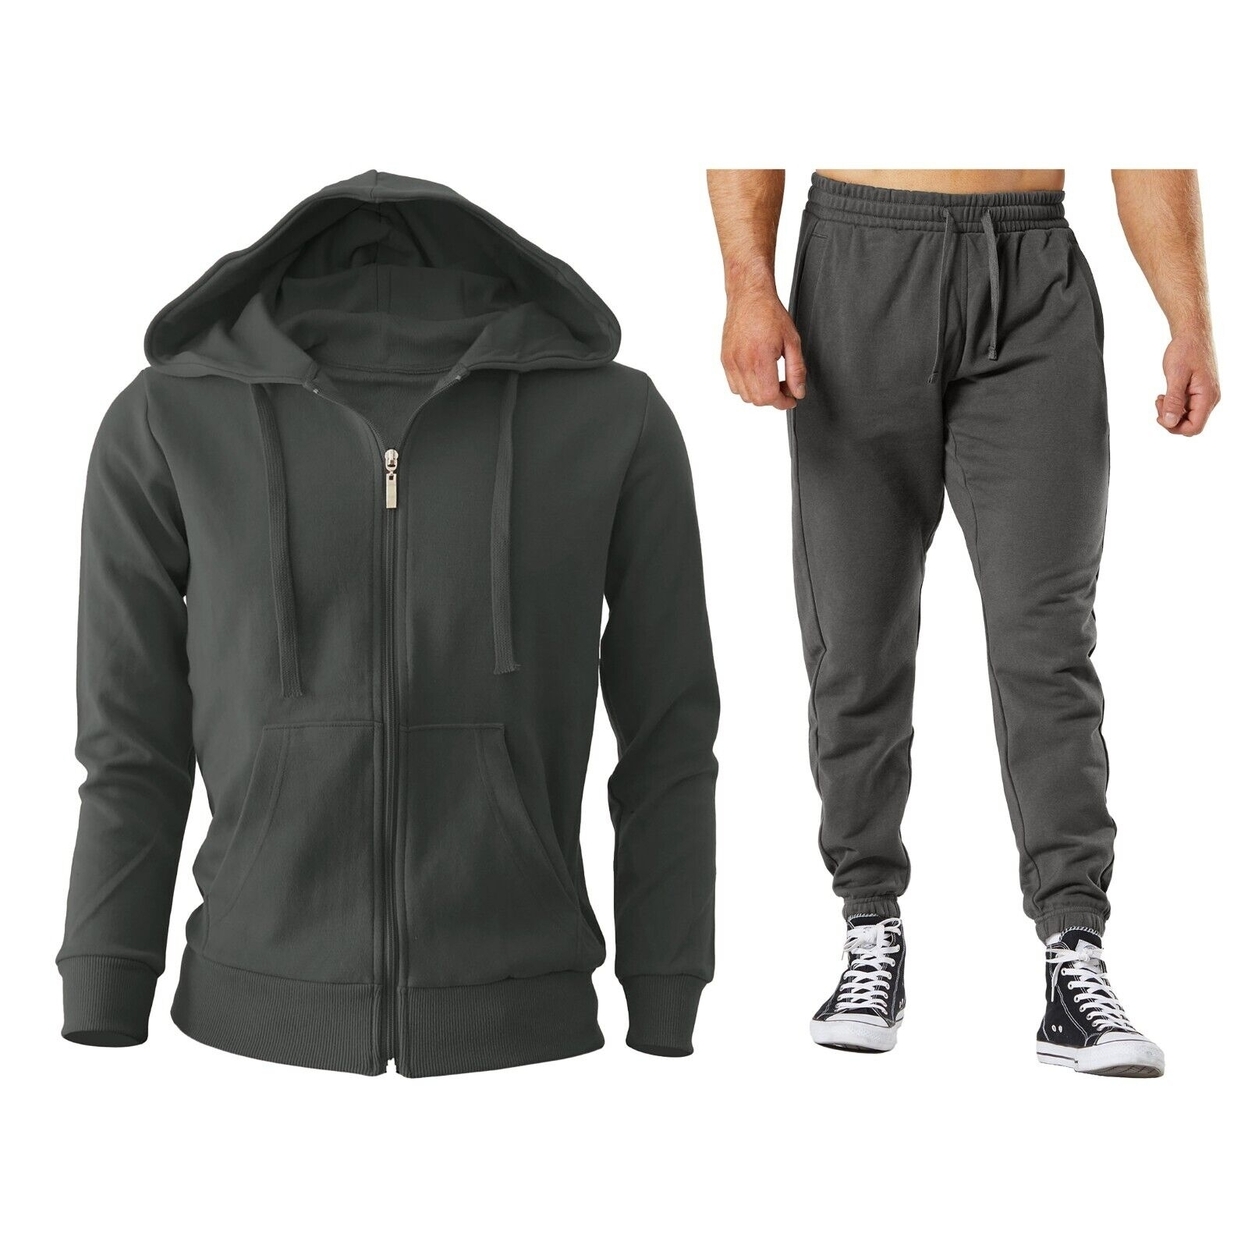 2/4-Piece: Men's Winter Warm Cozy Athletic Multi-Pockets BIG & TALL Sweatsuit Set - Charcoal, 2, Xx-large